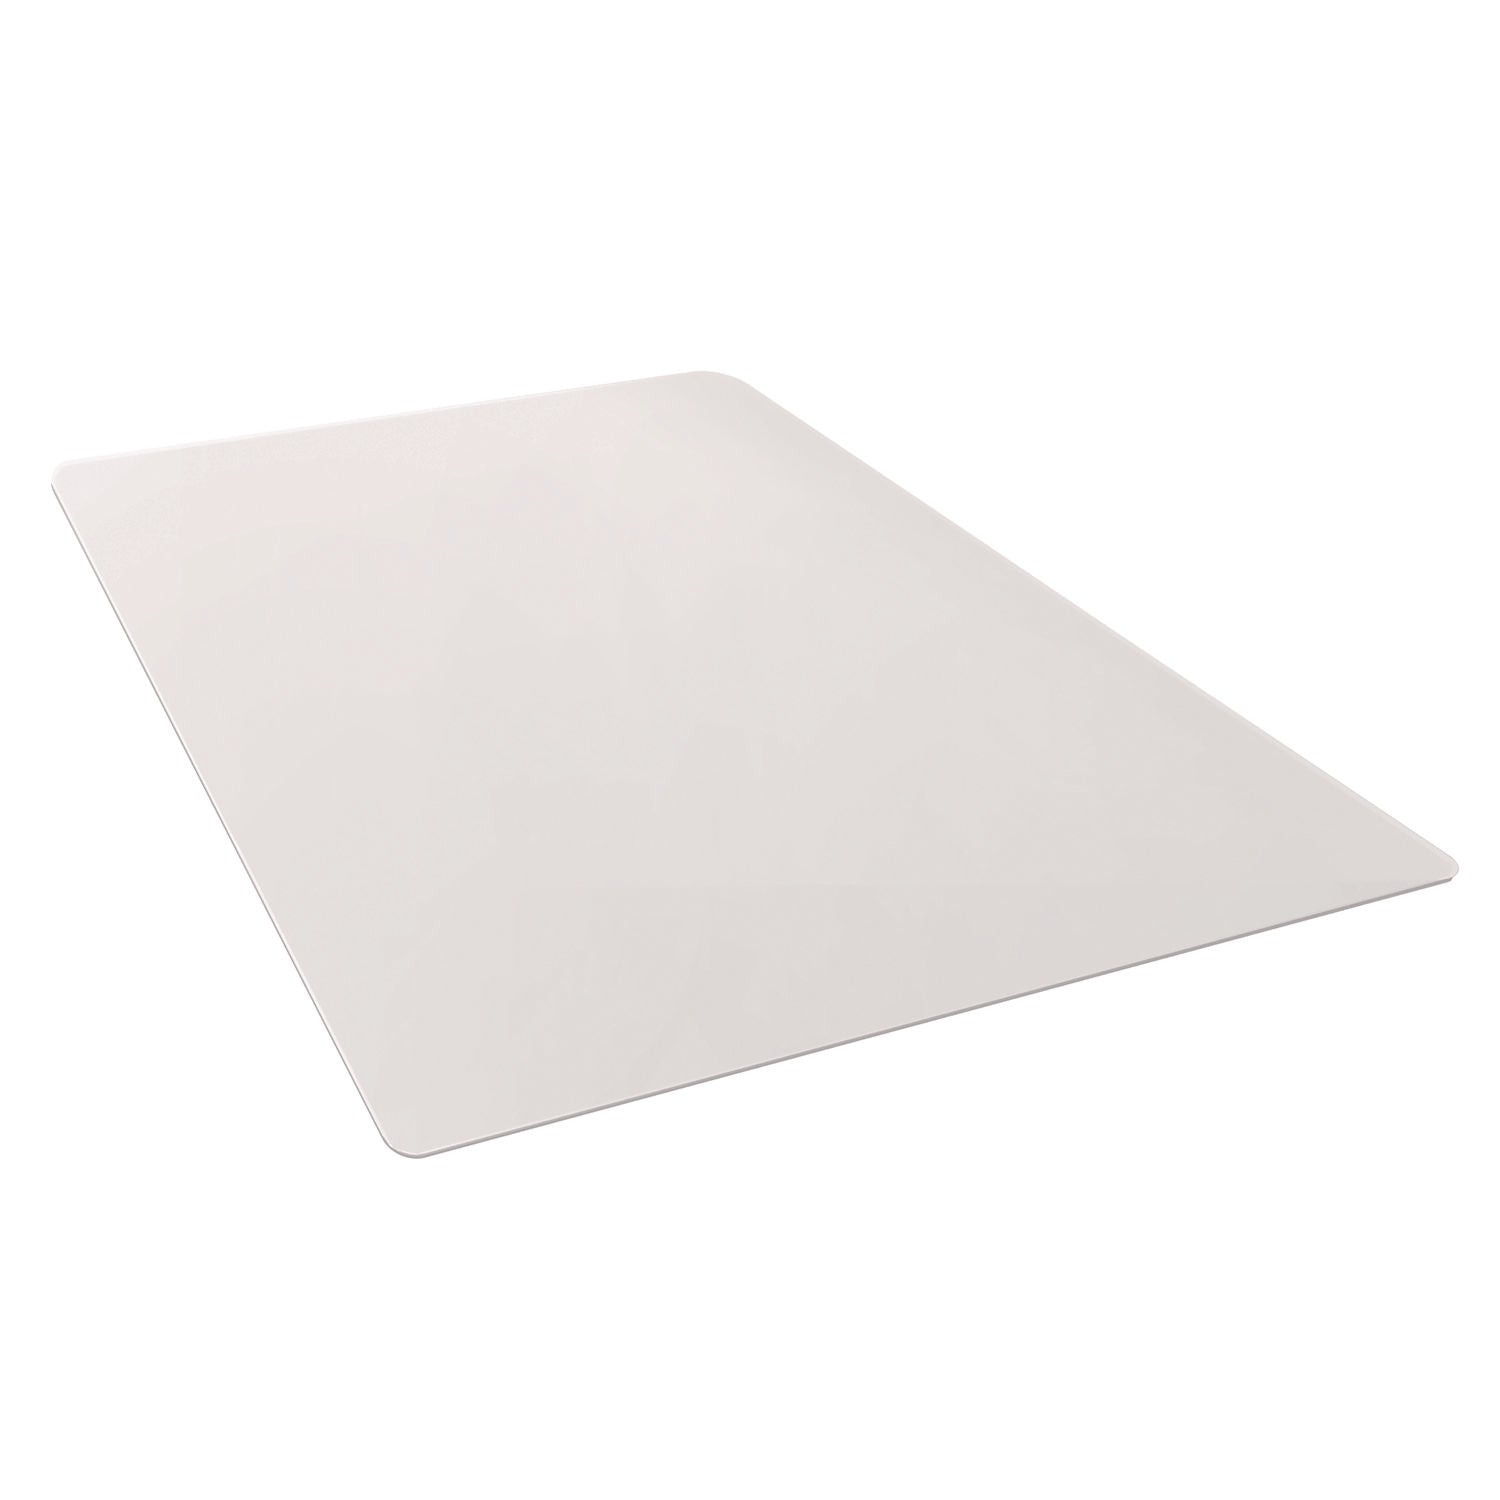 ecotex-marlon-bioplus-rectangular-polycarbonate-chair-mat-for-hard-floors-rectangular-45-x-53-clear_flrnrcmflbs0003 - 4